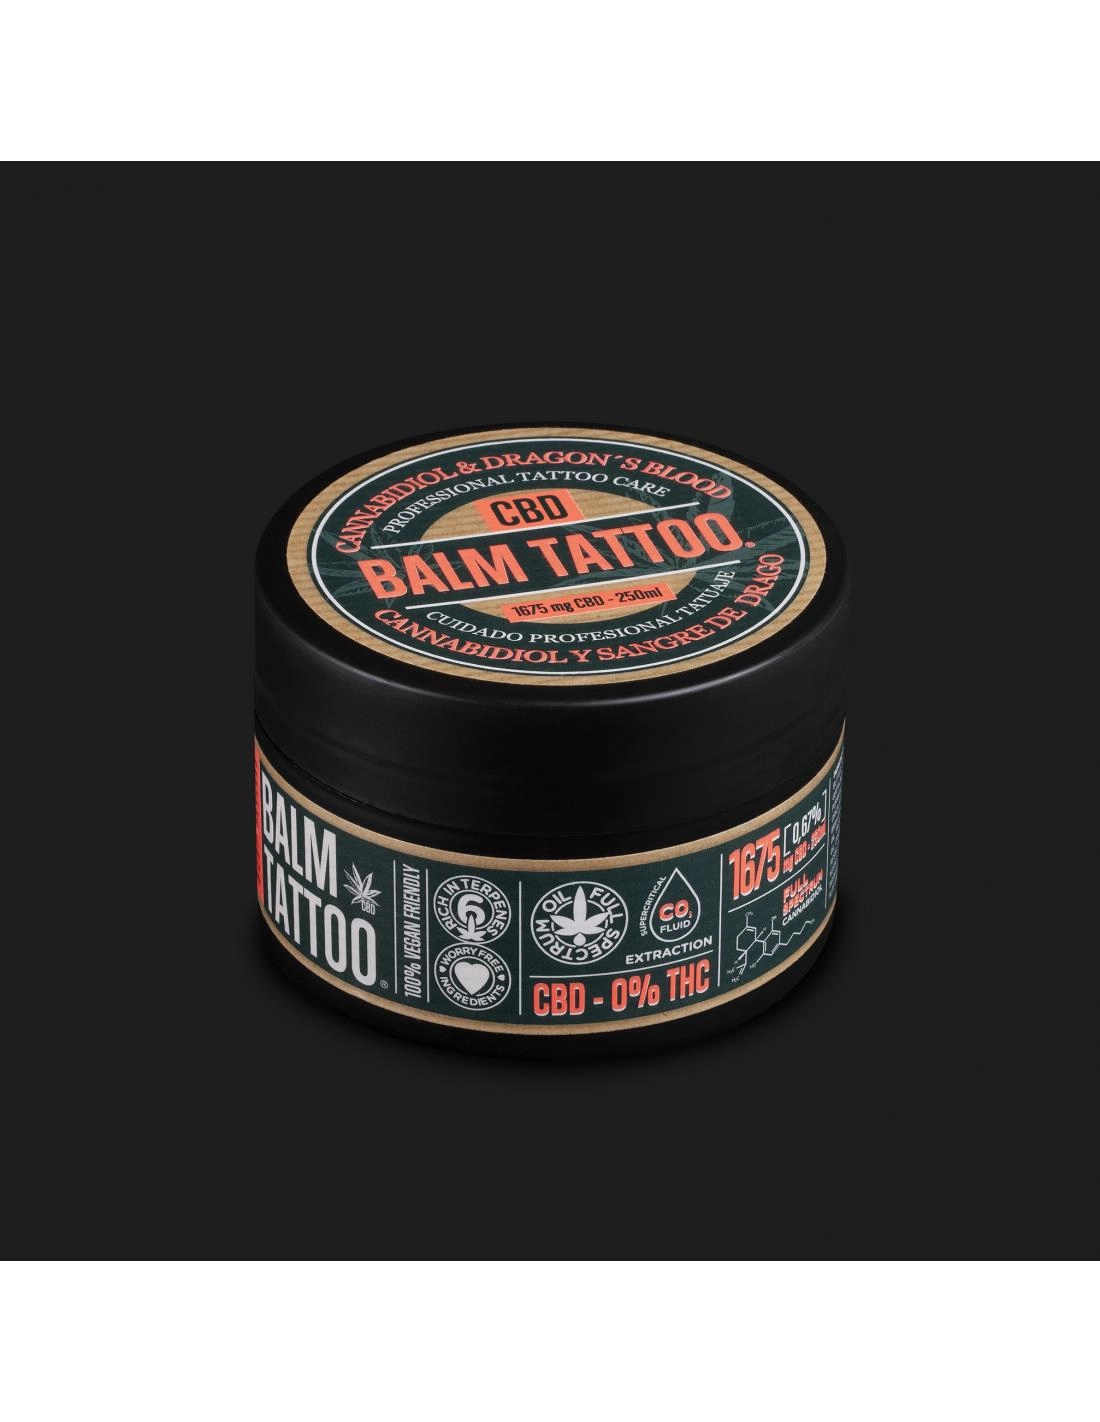 Baume Balm Tattoo Dragon's Blood Butter (1.675mg) - 250gr